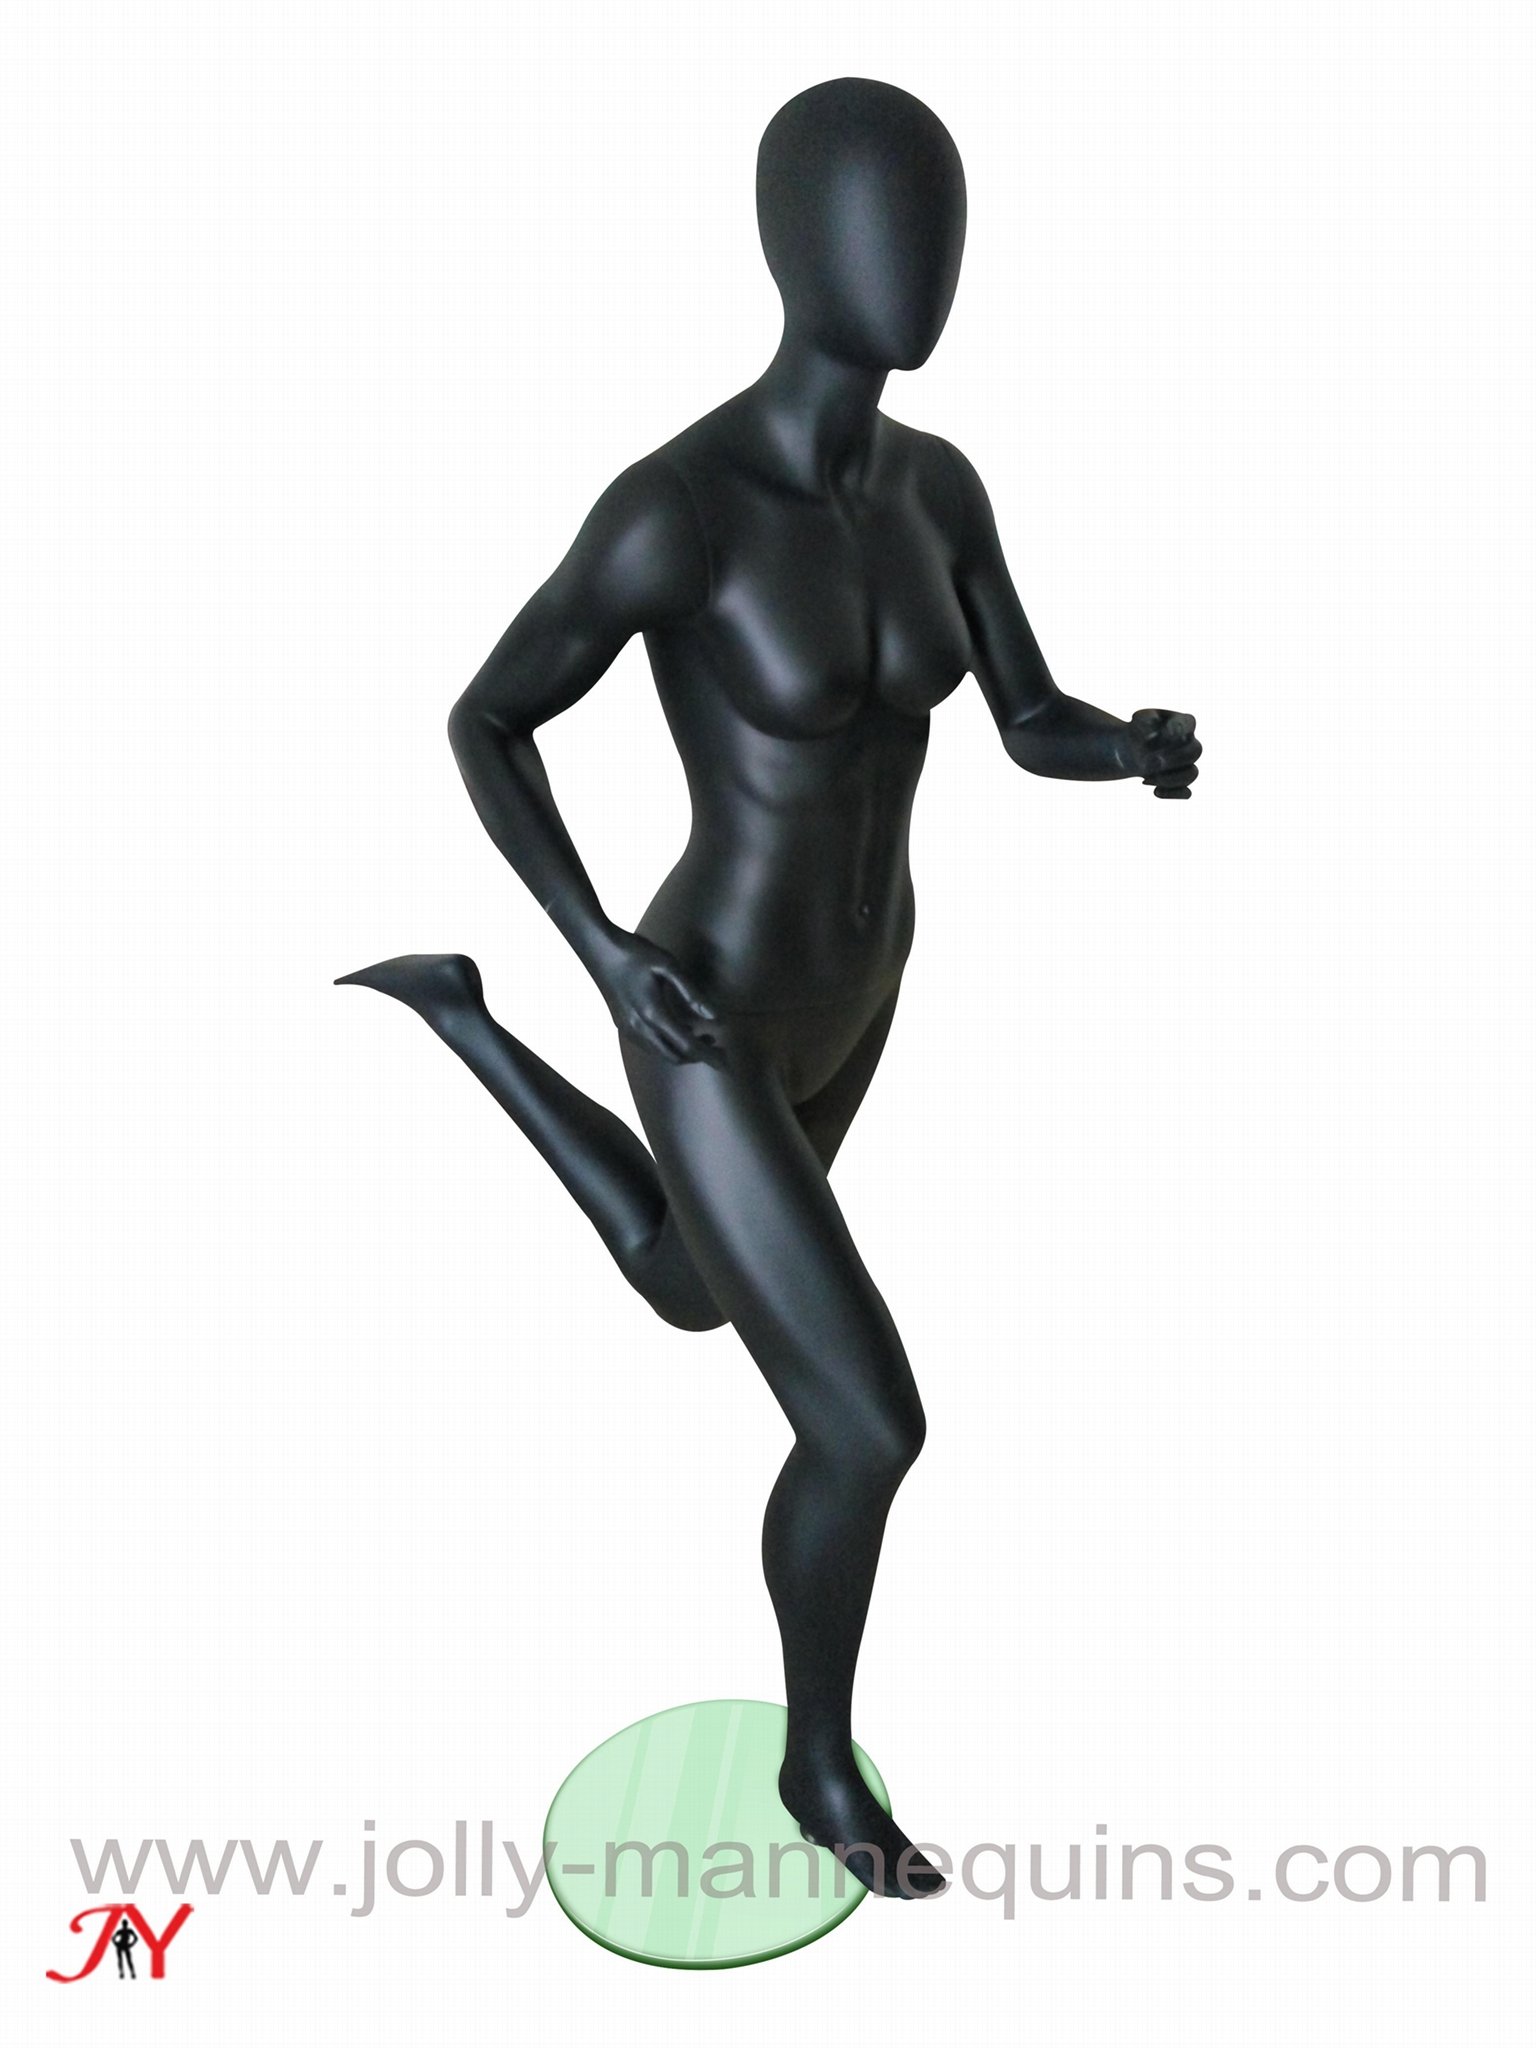 Jolly mannequins-female running mannequins black matte sport mannequins